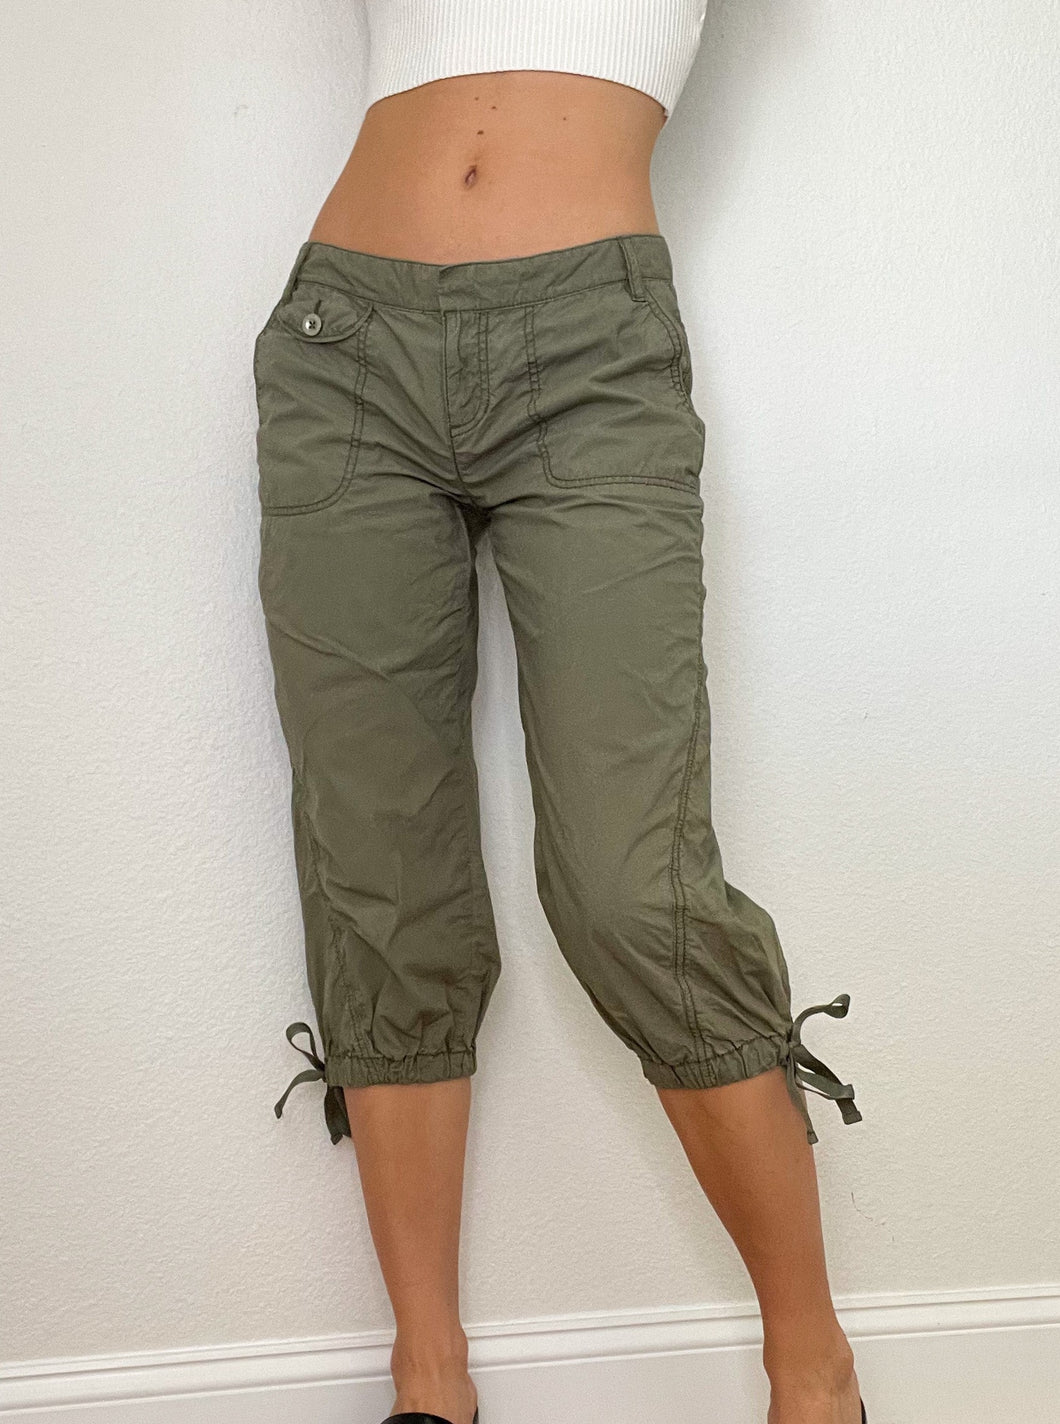 Green Early 2000s Cargo Capri Pants (S)